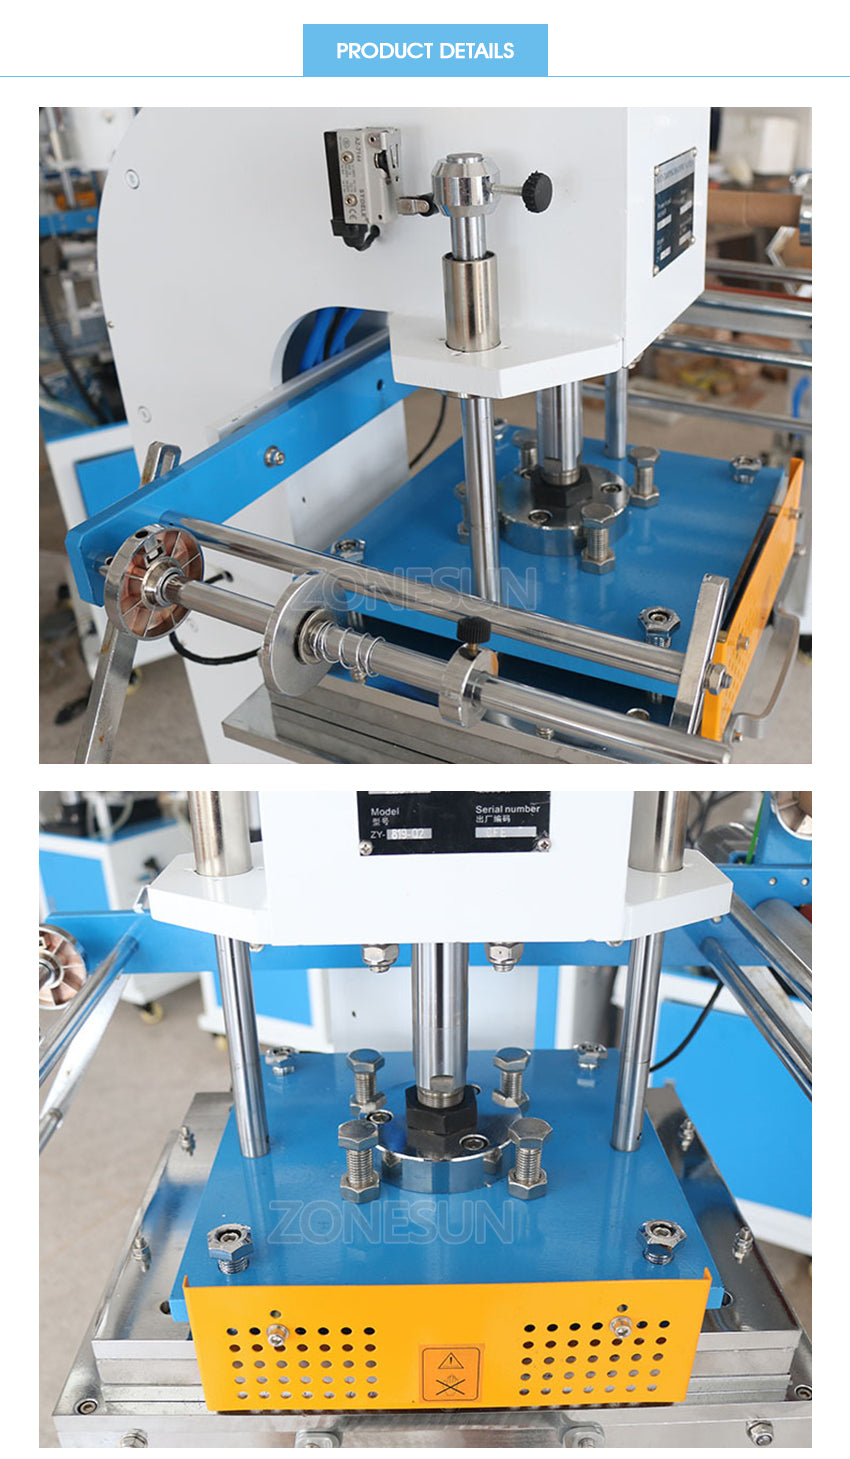 Machine details of Hot foil stamping machine